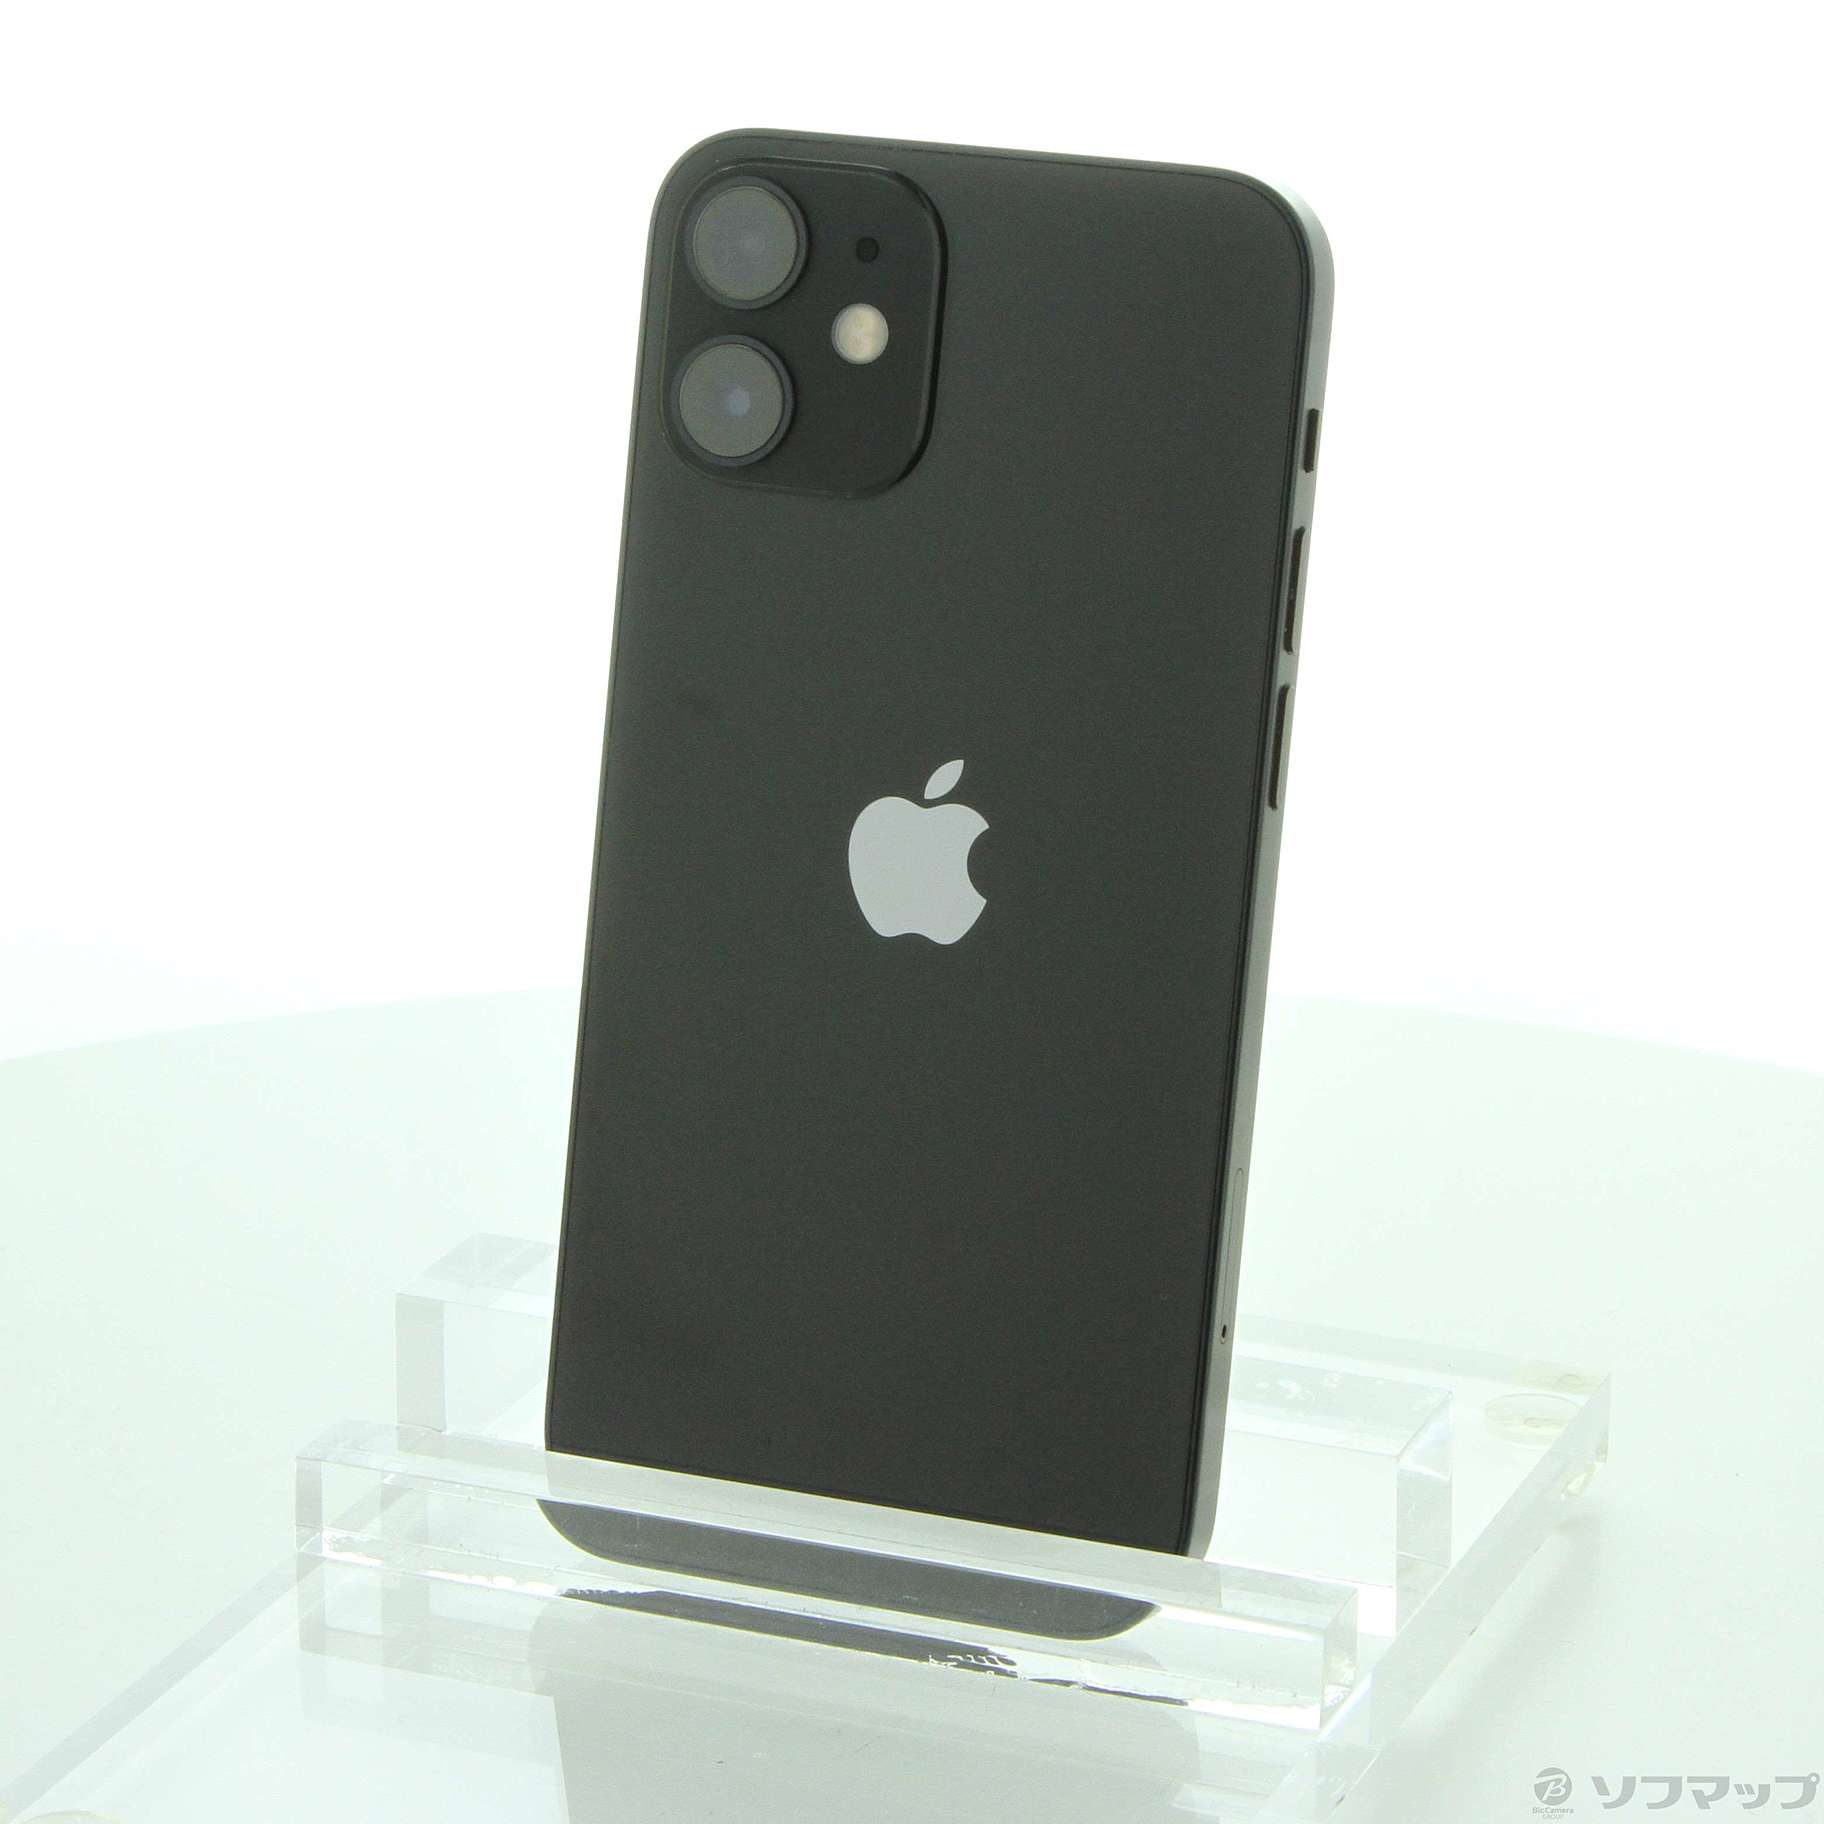 iPhone12 mini 256GB ブラック NGDR3J／A SIMフリー